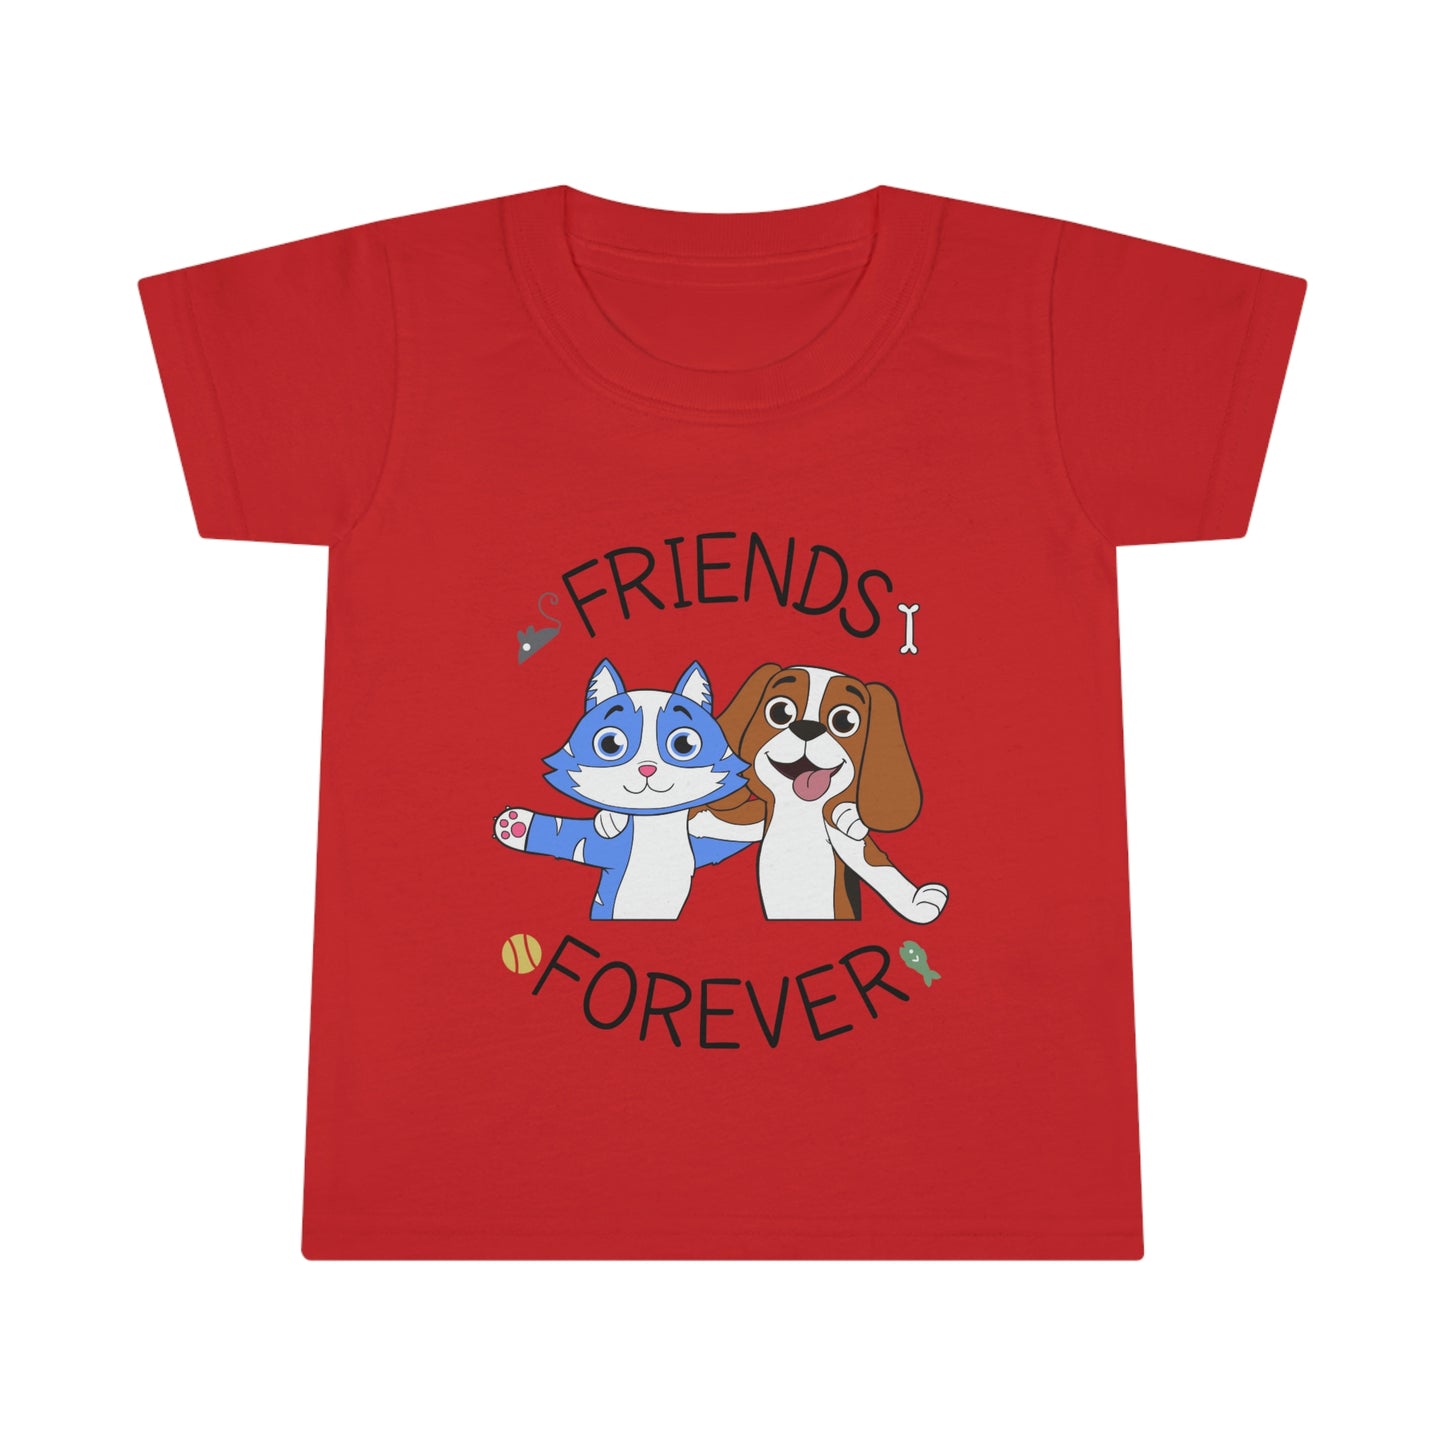 Friends Forever Toddler T-shirt